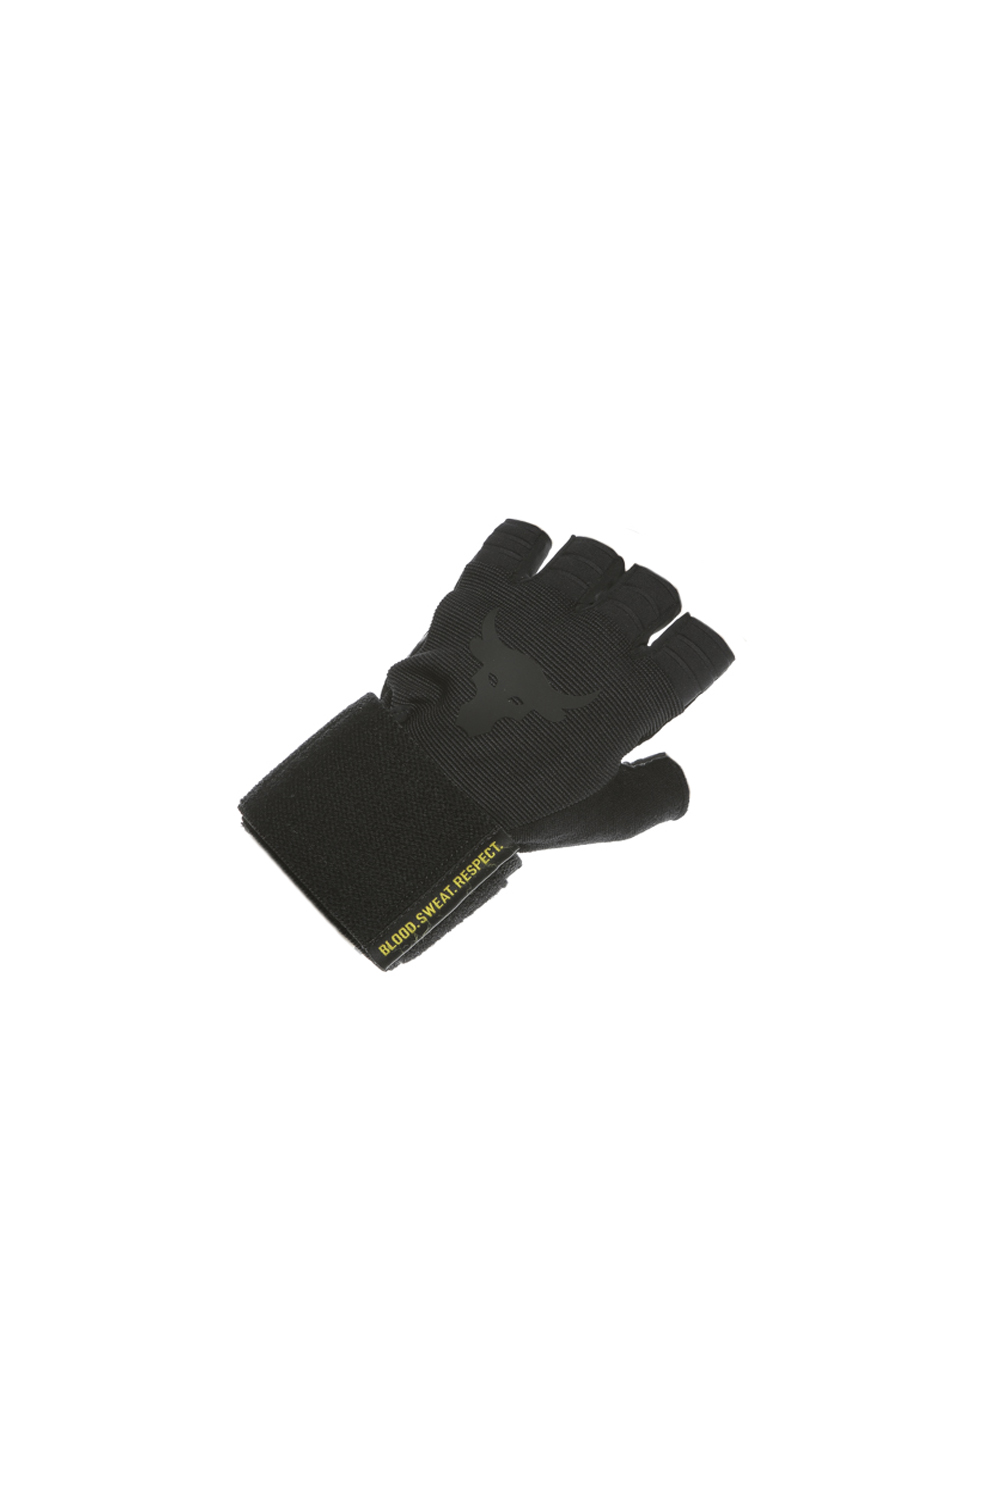 UNDER ARMOUR – Ανδρικα γαντια προπονησης UNDER ARMOUR Project Rock Training Glove μαυρα